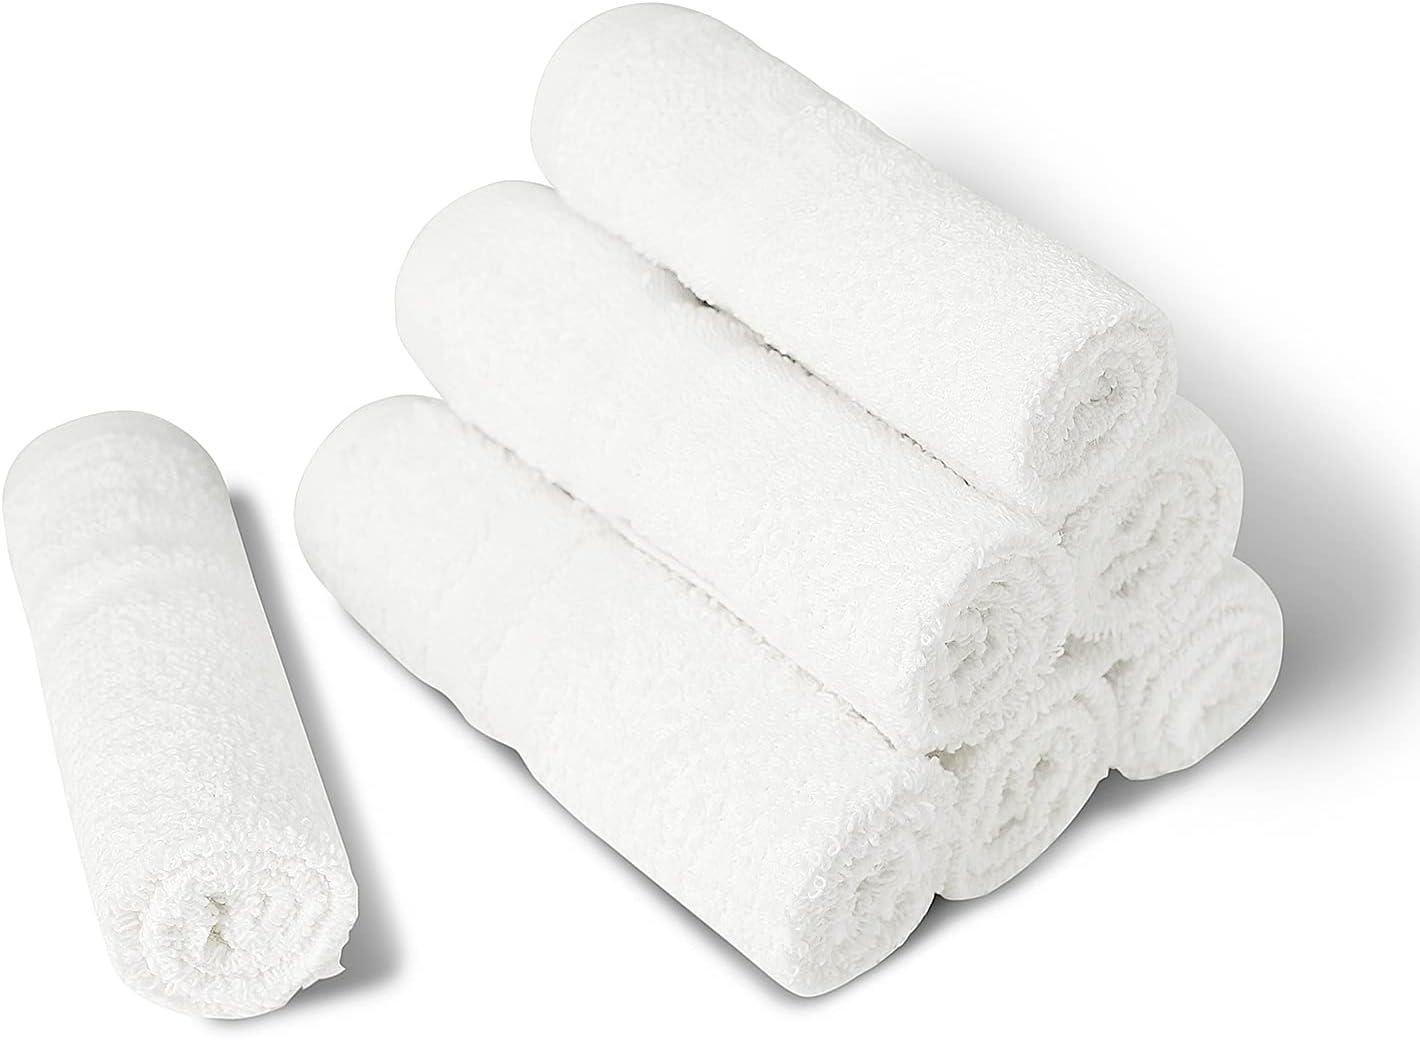 12X12 Wholesale Premium White Wash Cloth - Towel Super Center